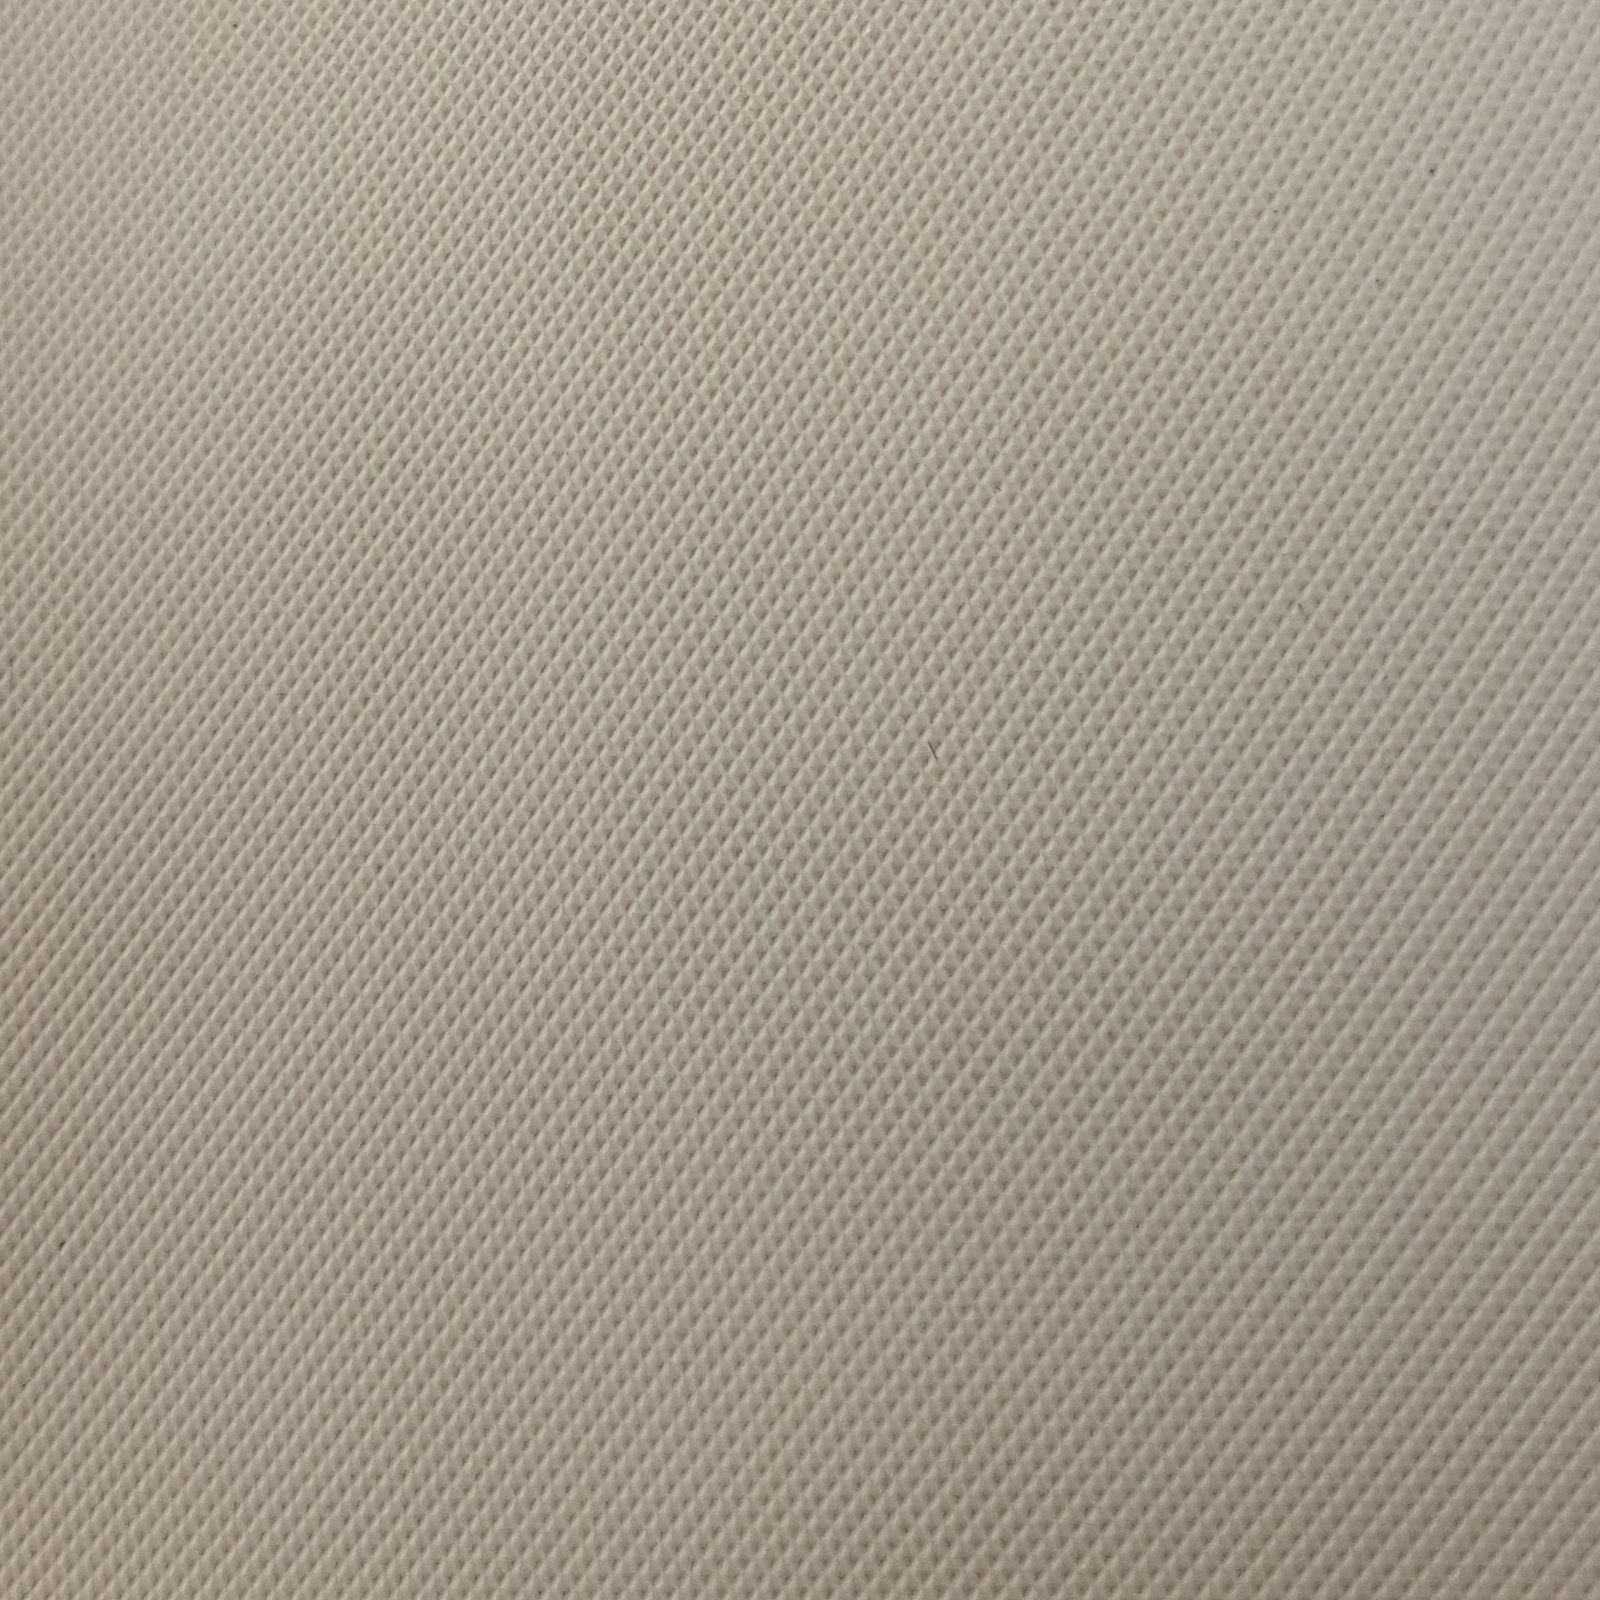 Kunstleder Vinyl für VW-Faltdach beige